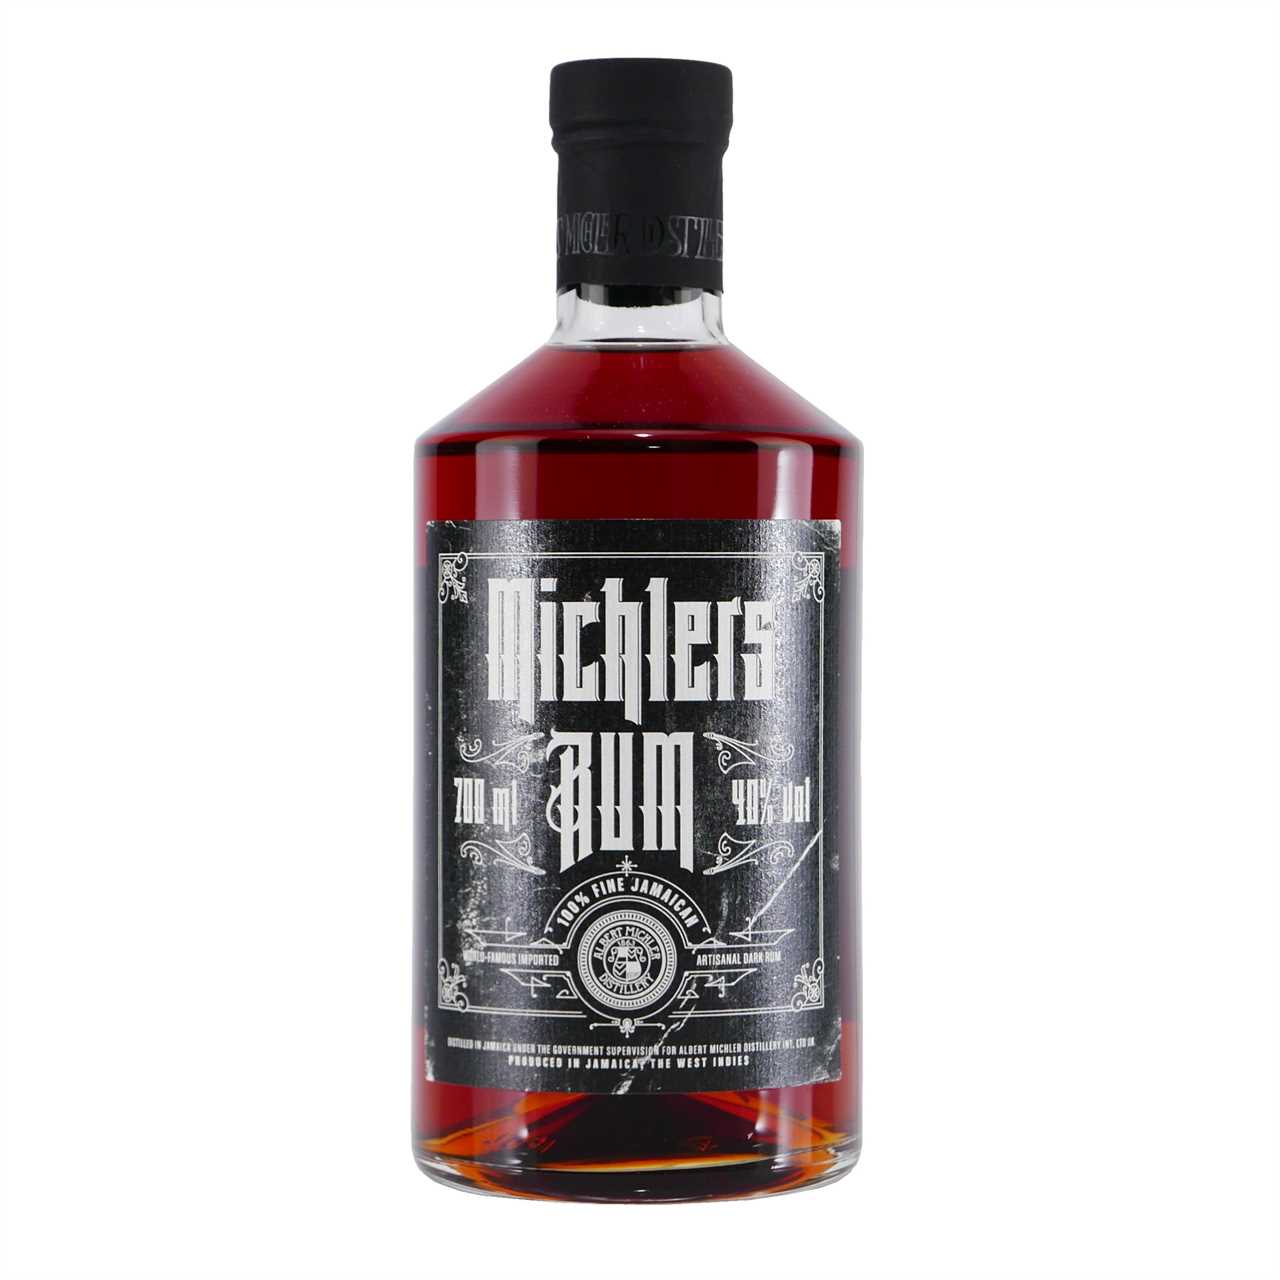 Michlers Jamaican Artisanal Dark Rum